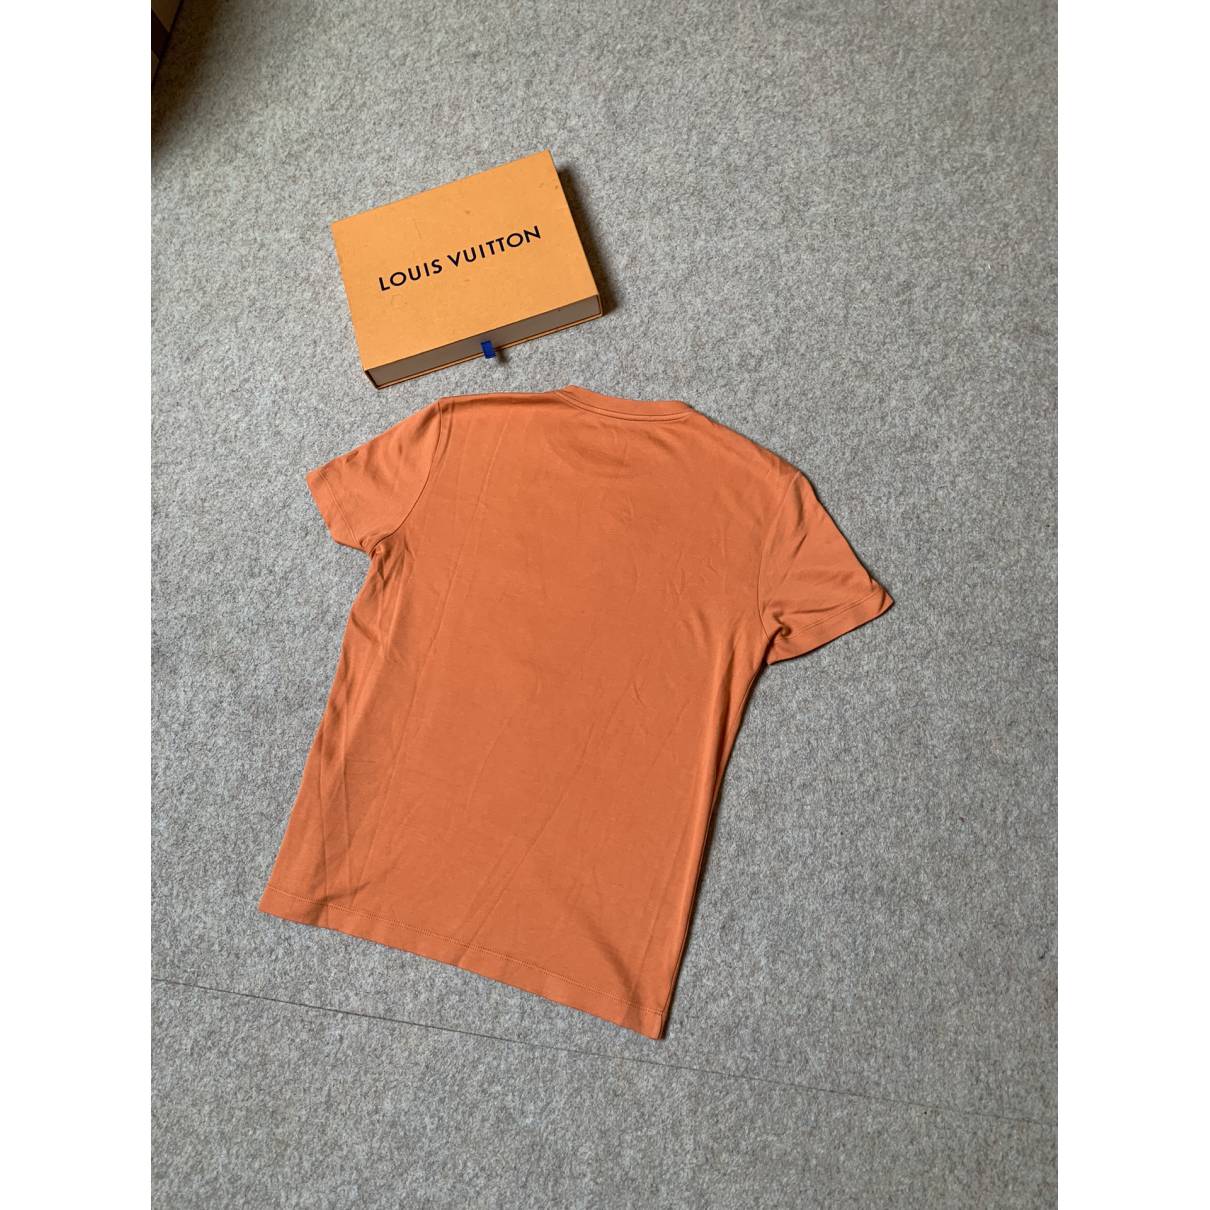 T-shirt Louis Vuitton Orange size XS International in Cotton